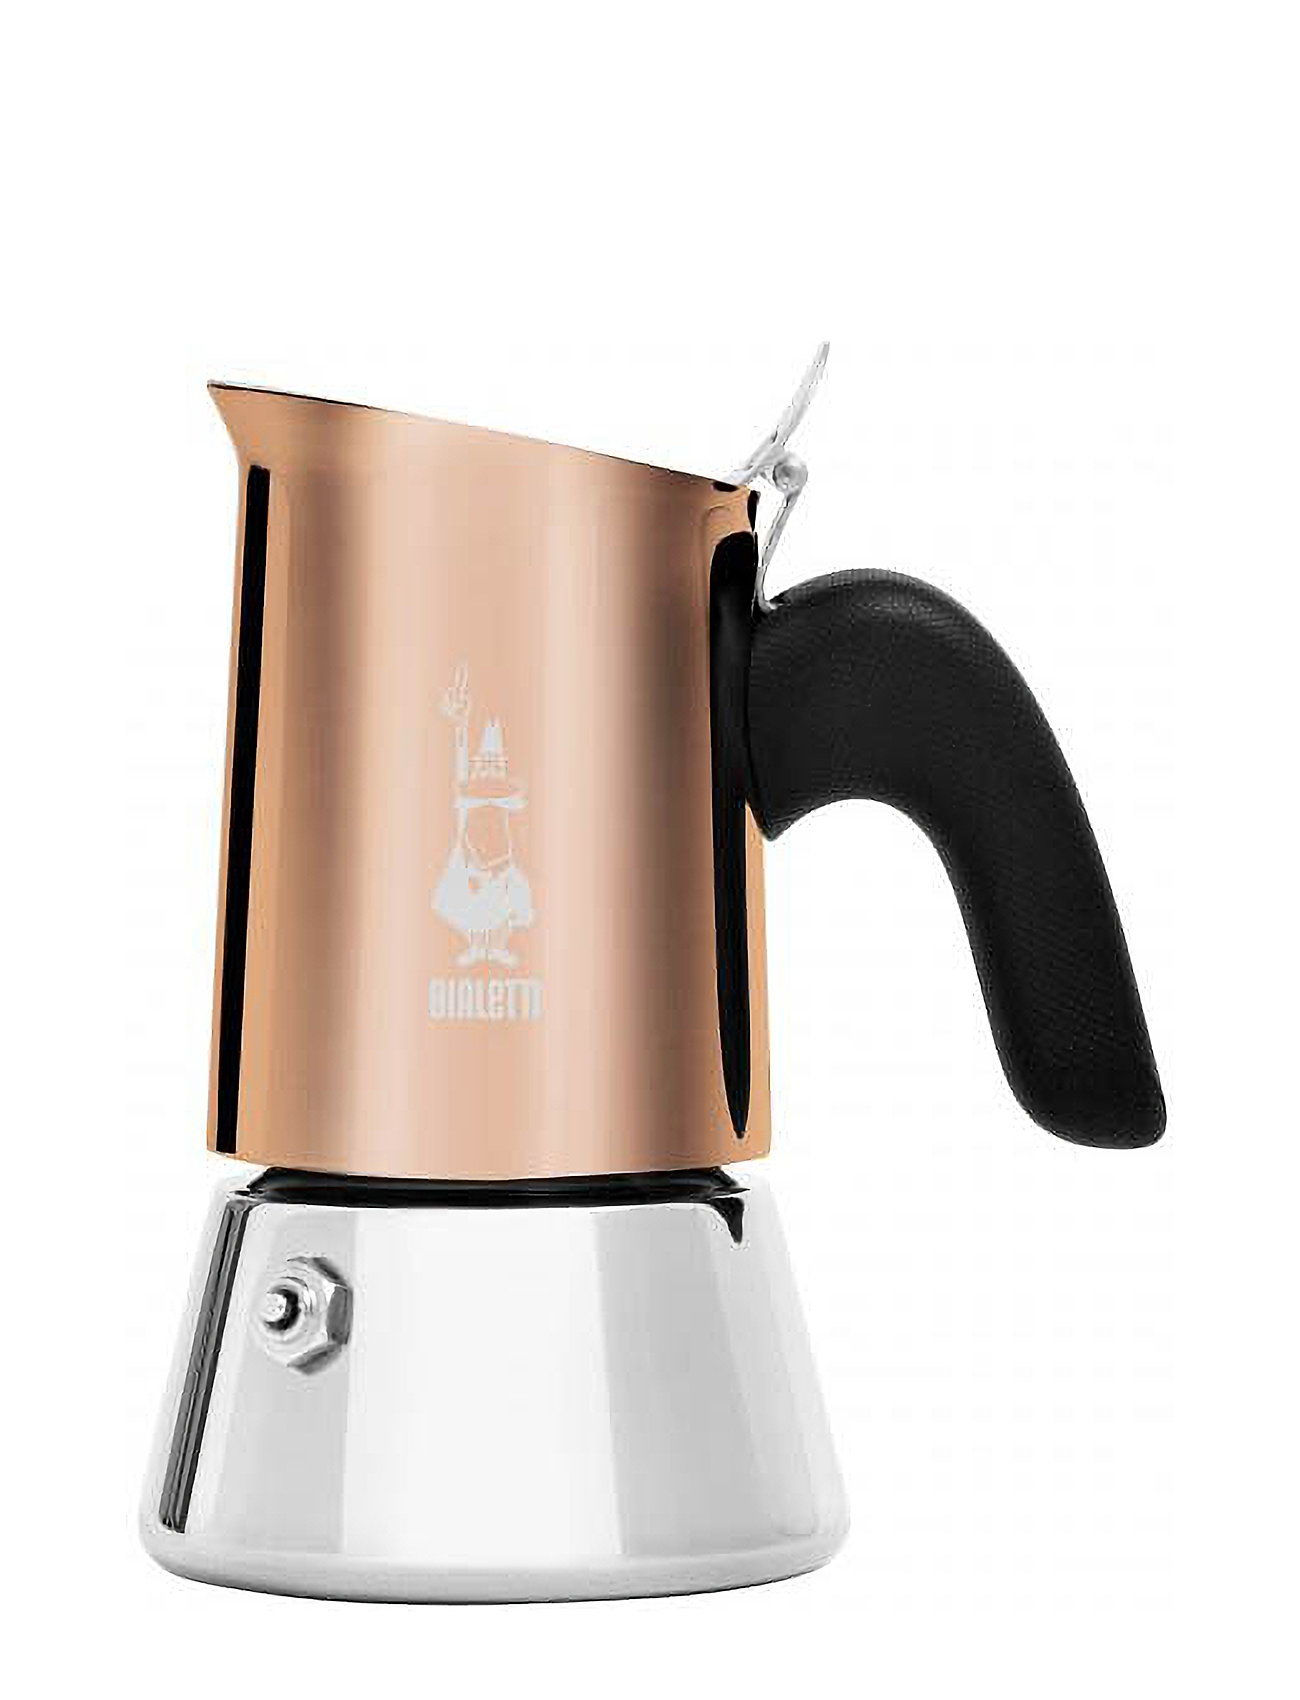 New Venus Colour Home Kitchen Kitchen Appliances Coffee Makers Moka Pots Brown Bialetti